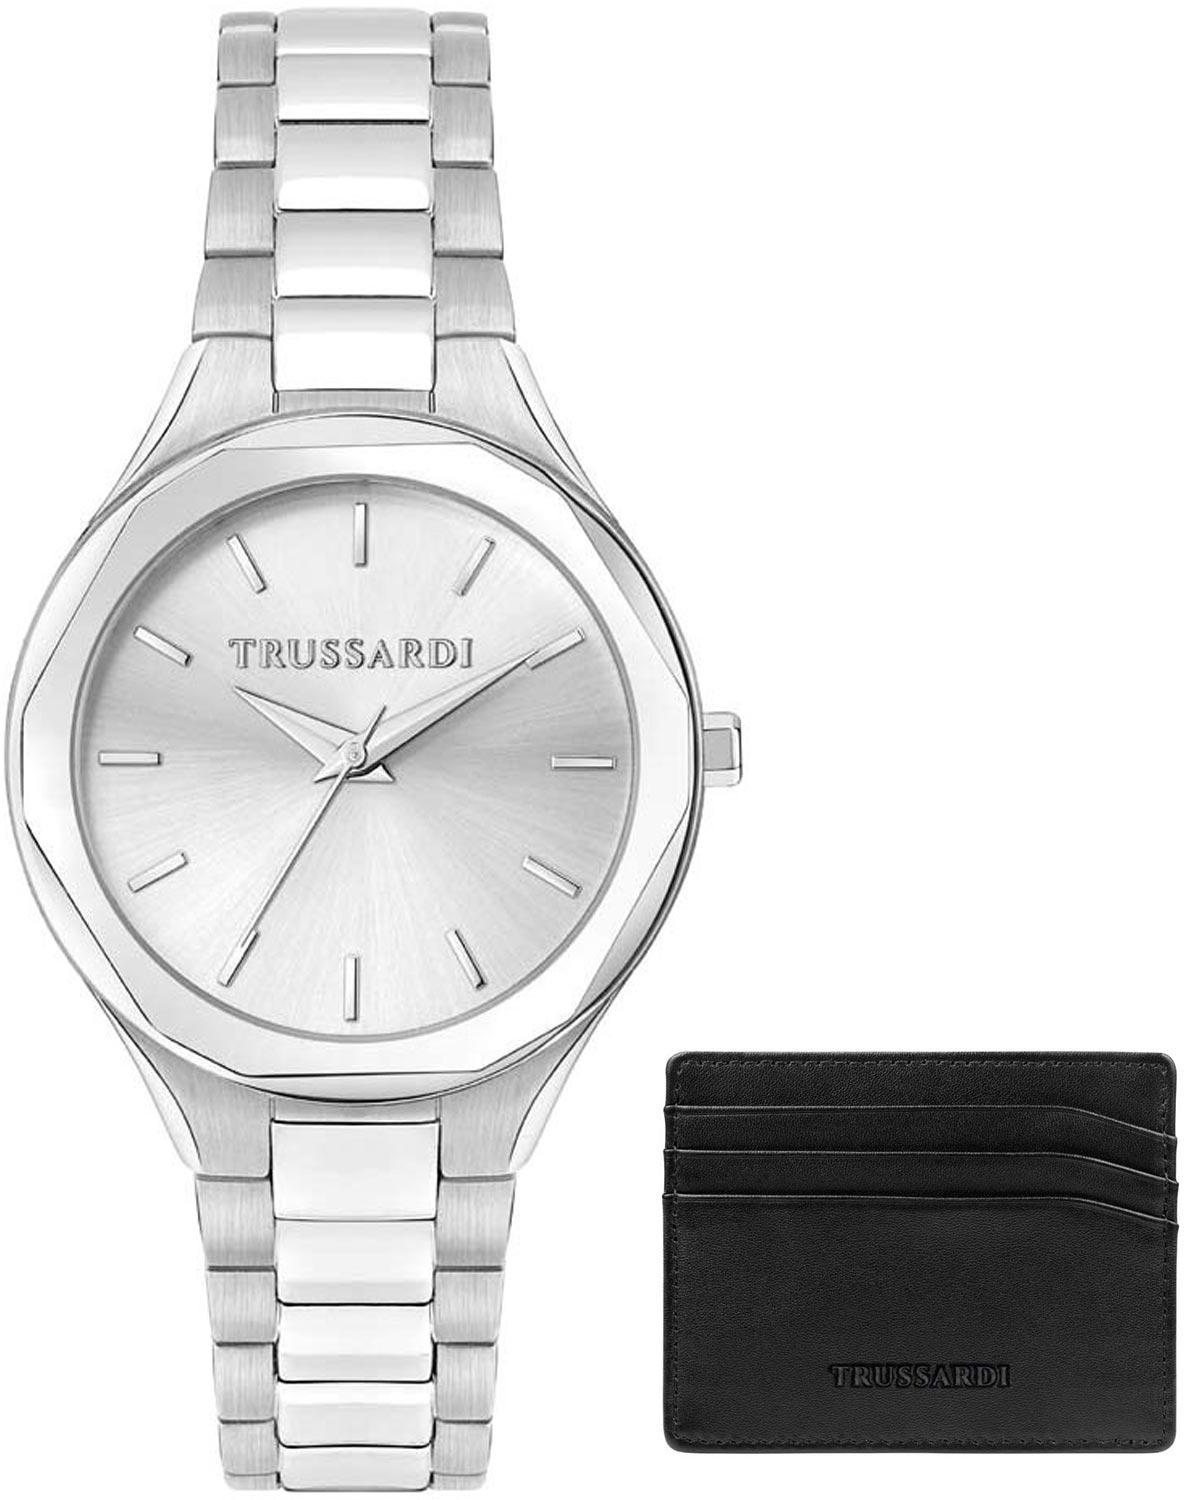 TRUSSARDI Brink Gift Set - R2453157507, Silver case with Stainless Steel Bracelet